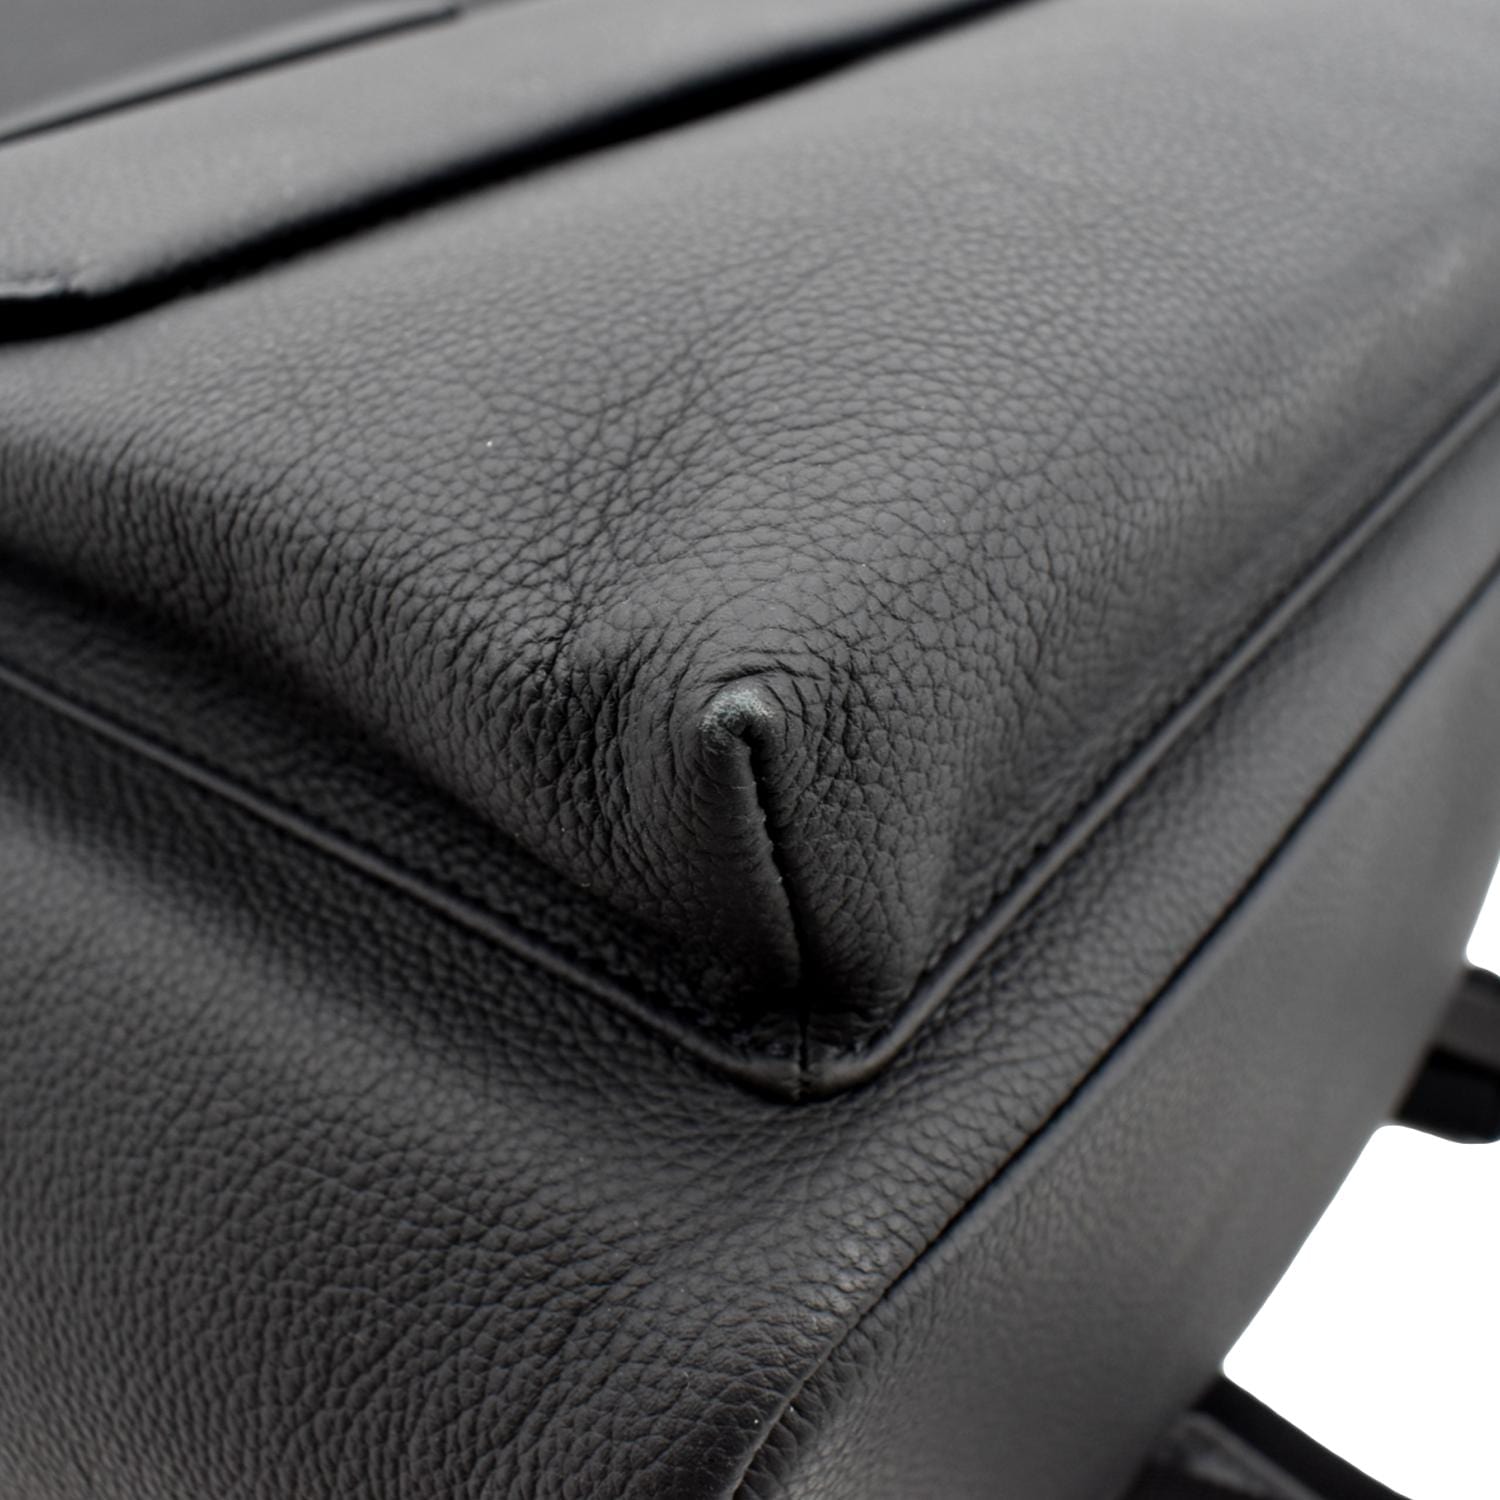 Louis Vuitton Takeoff Backpack, Khaki Green Leather, Preowned No Dustbag  WA001 - Julia Rose Boston